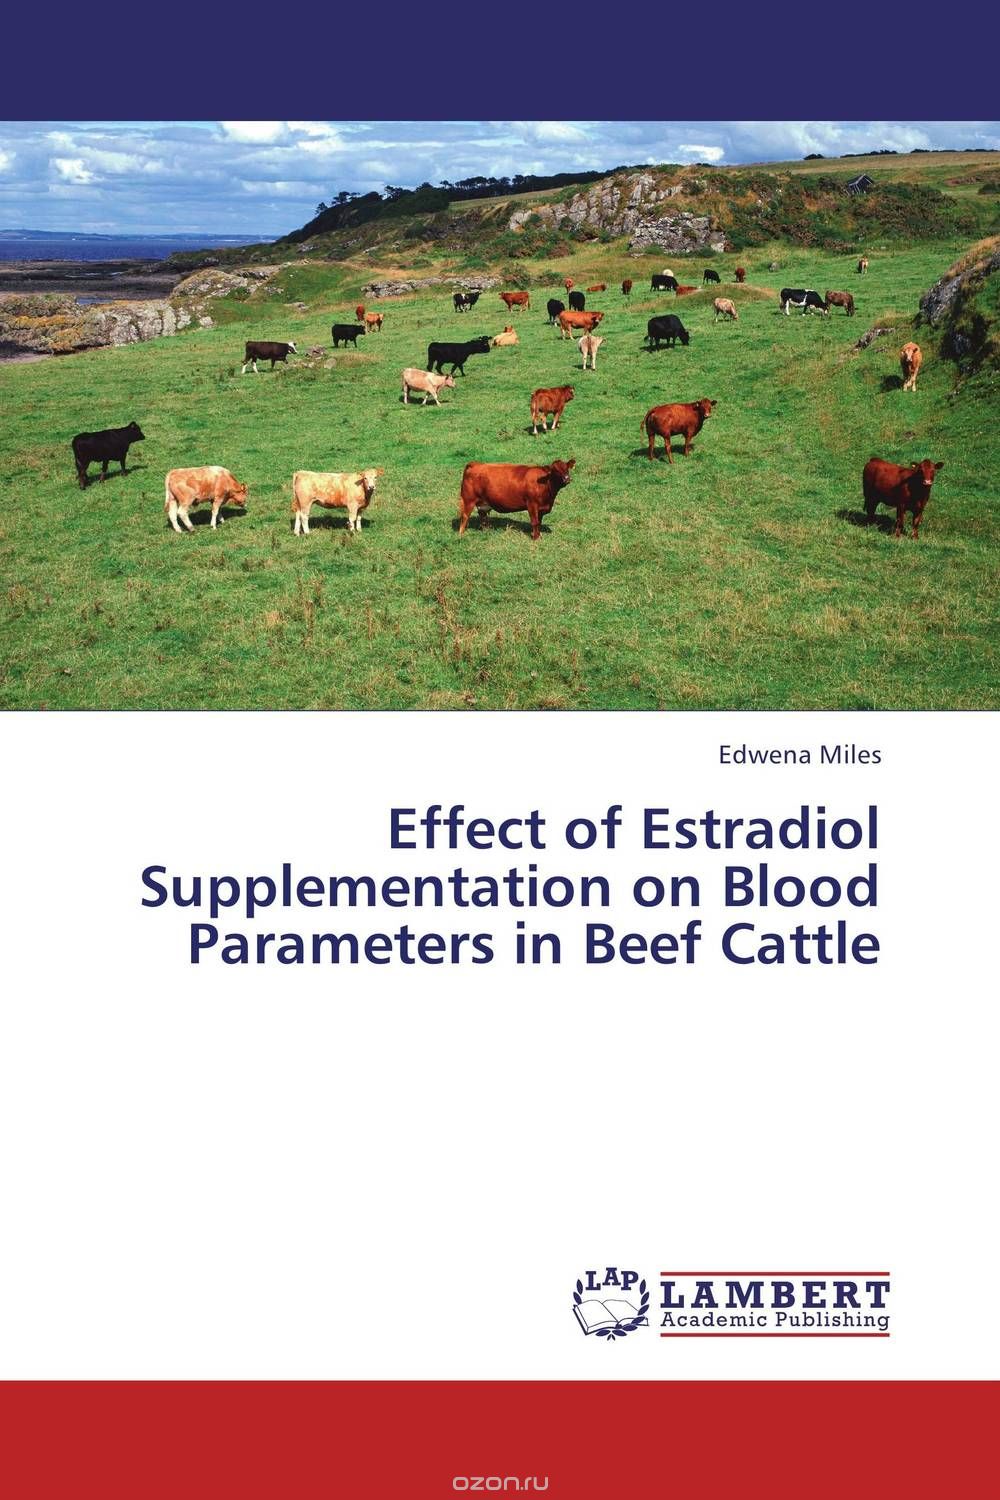 Скачать книгу "Effect of Estradiol Supplementation on Blood Parameters in Beef Cattle"